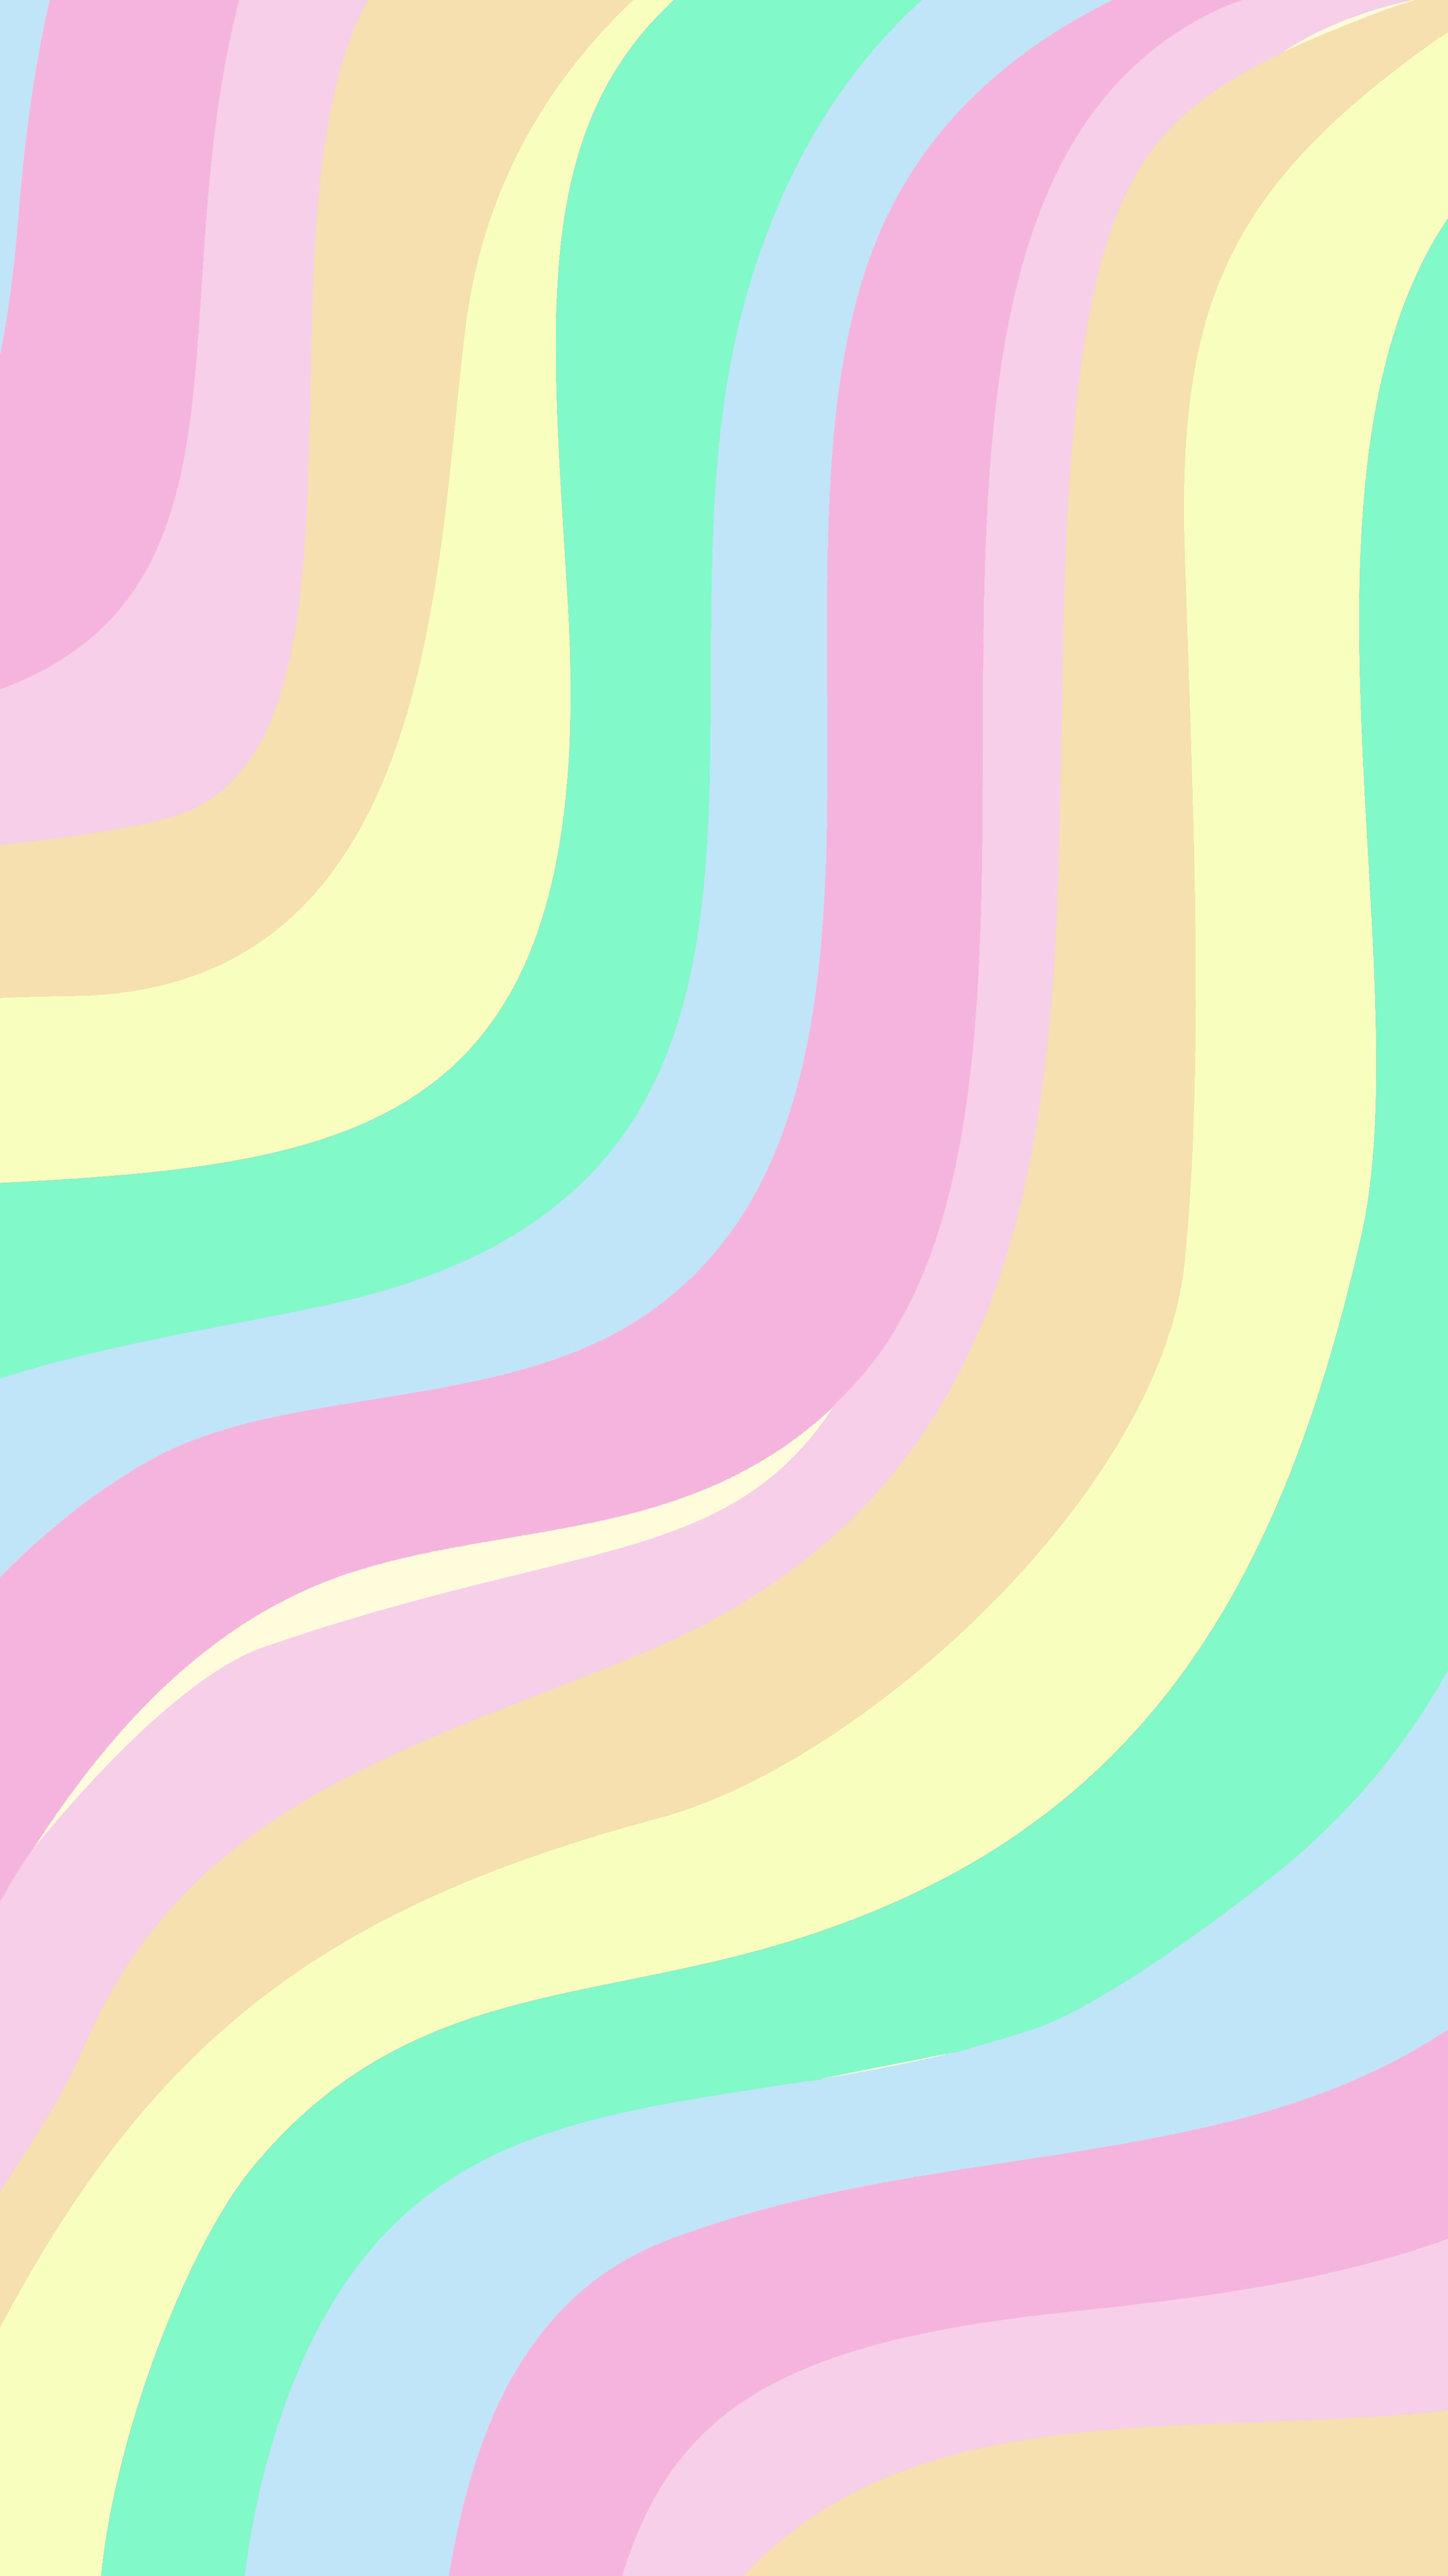 Phone wallpaper. 'pastel rainbow abstract'. Fondos de pantalla de iphone, iPhone fondos de pantalla, Ideas de fondos de pantalla